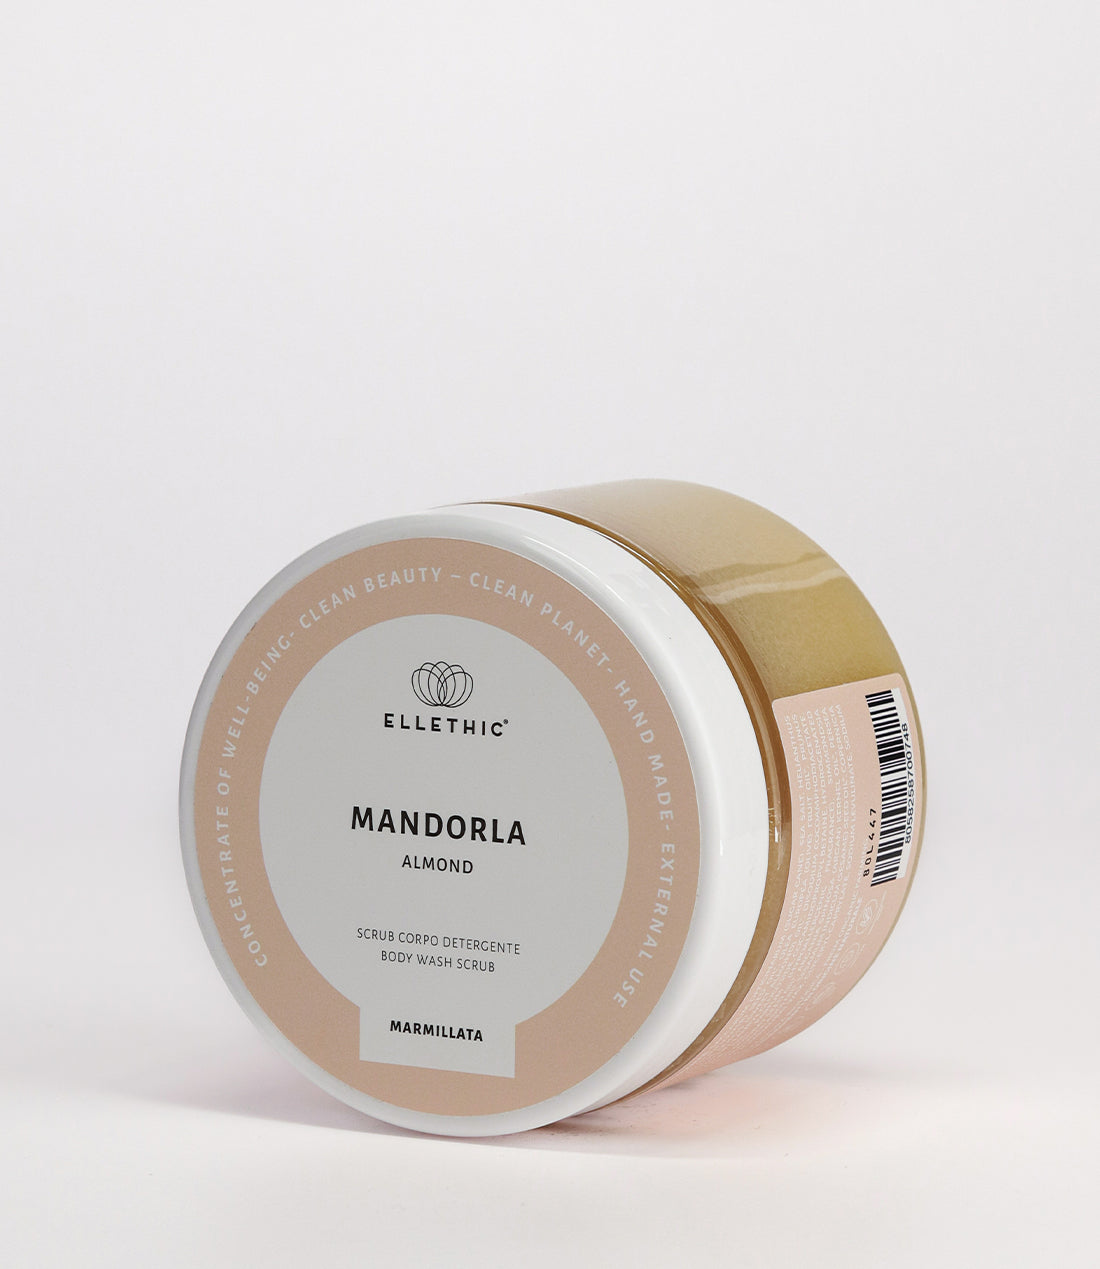 Scrub corpo detergente Mandorla 500g - Marmillata